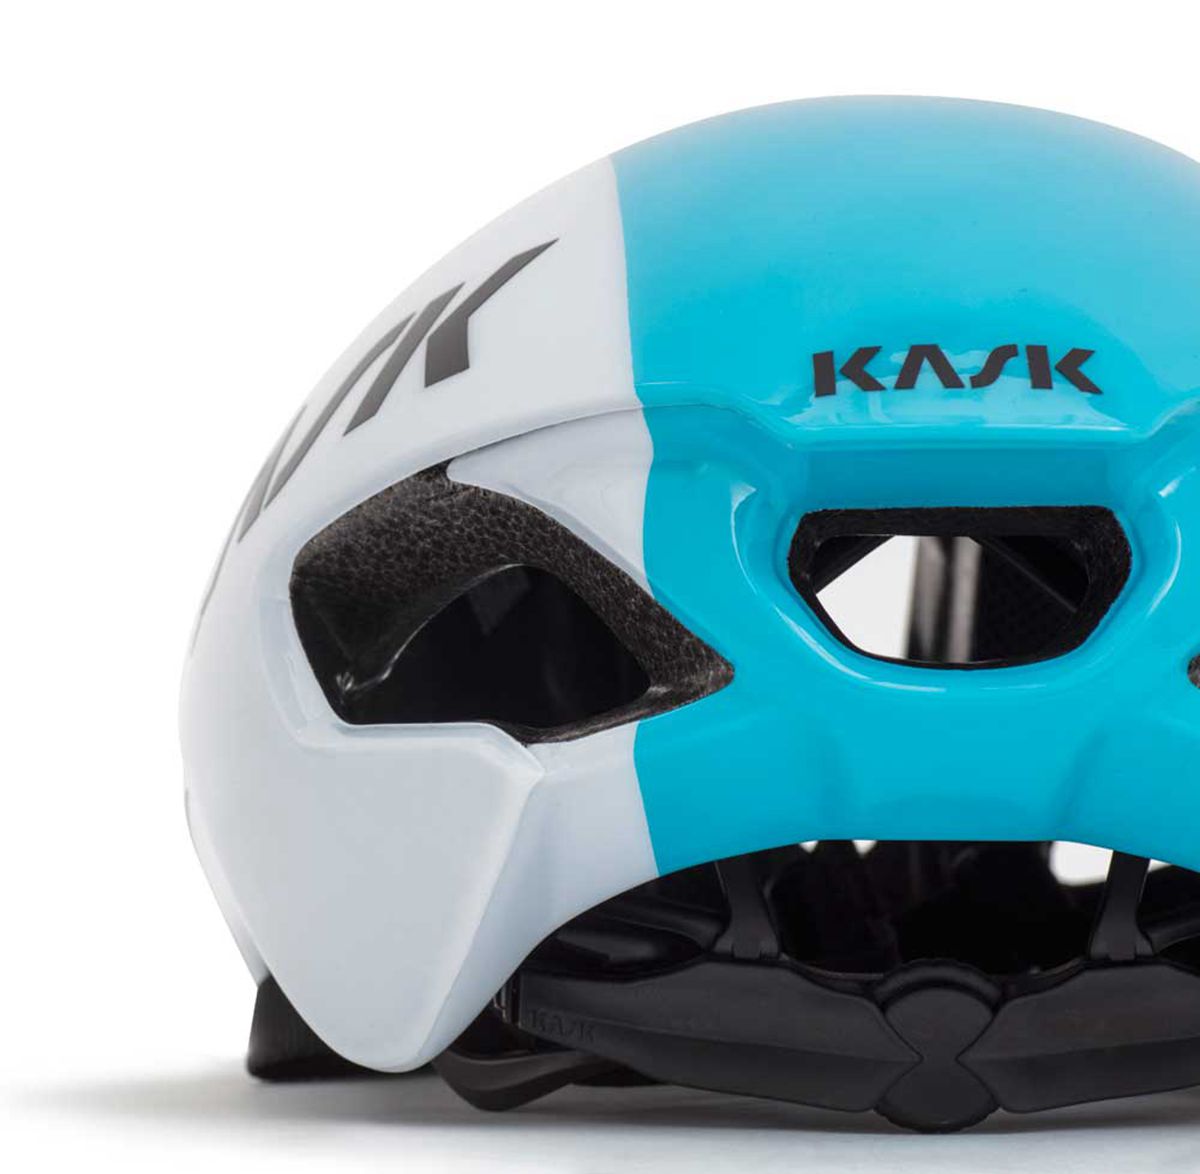 2018-kask-utopia-road-bike-helmet-for-team-sky-2.jpg